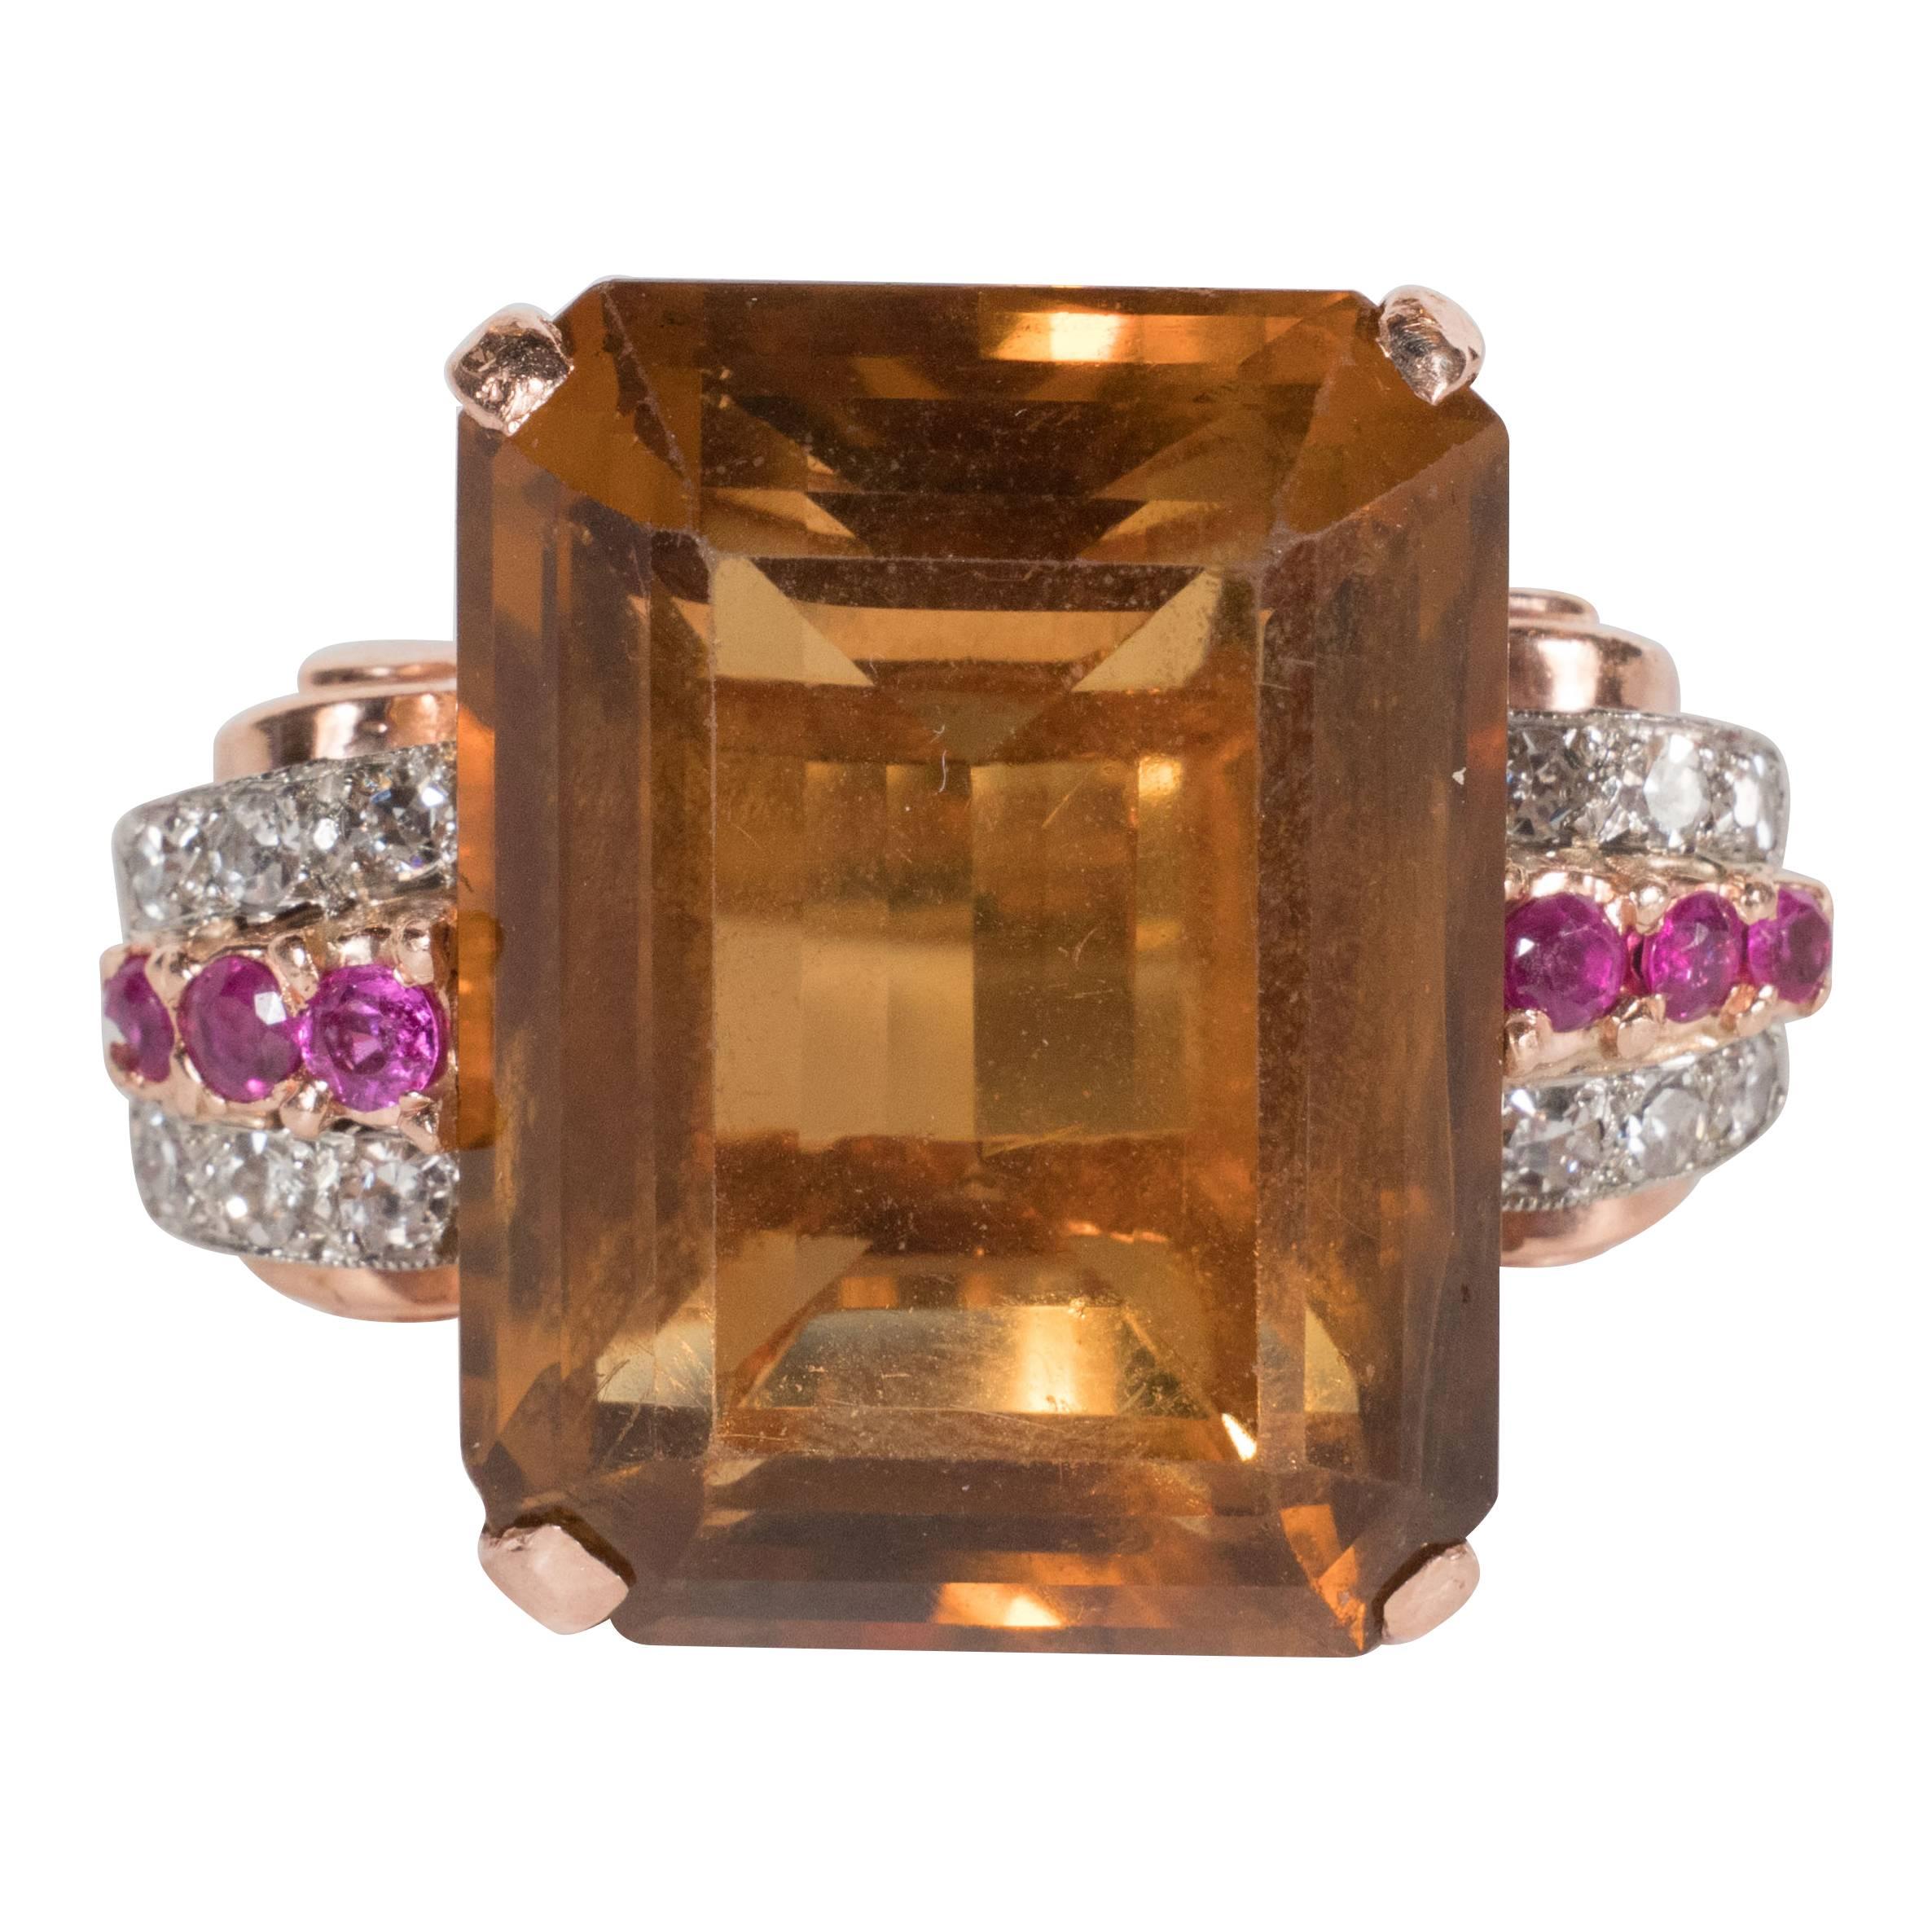 Stunning Retro 14 Karat Rose Gold Topaz Ring with Diamonds and Rubies